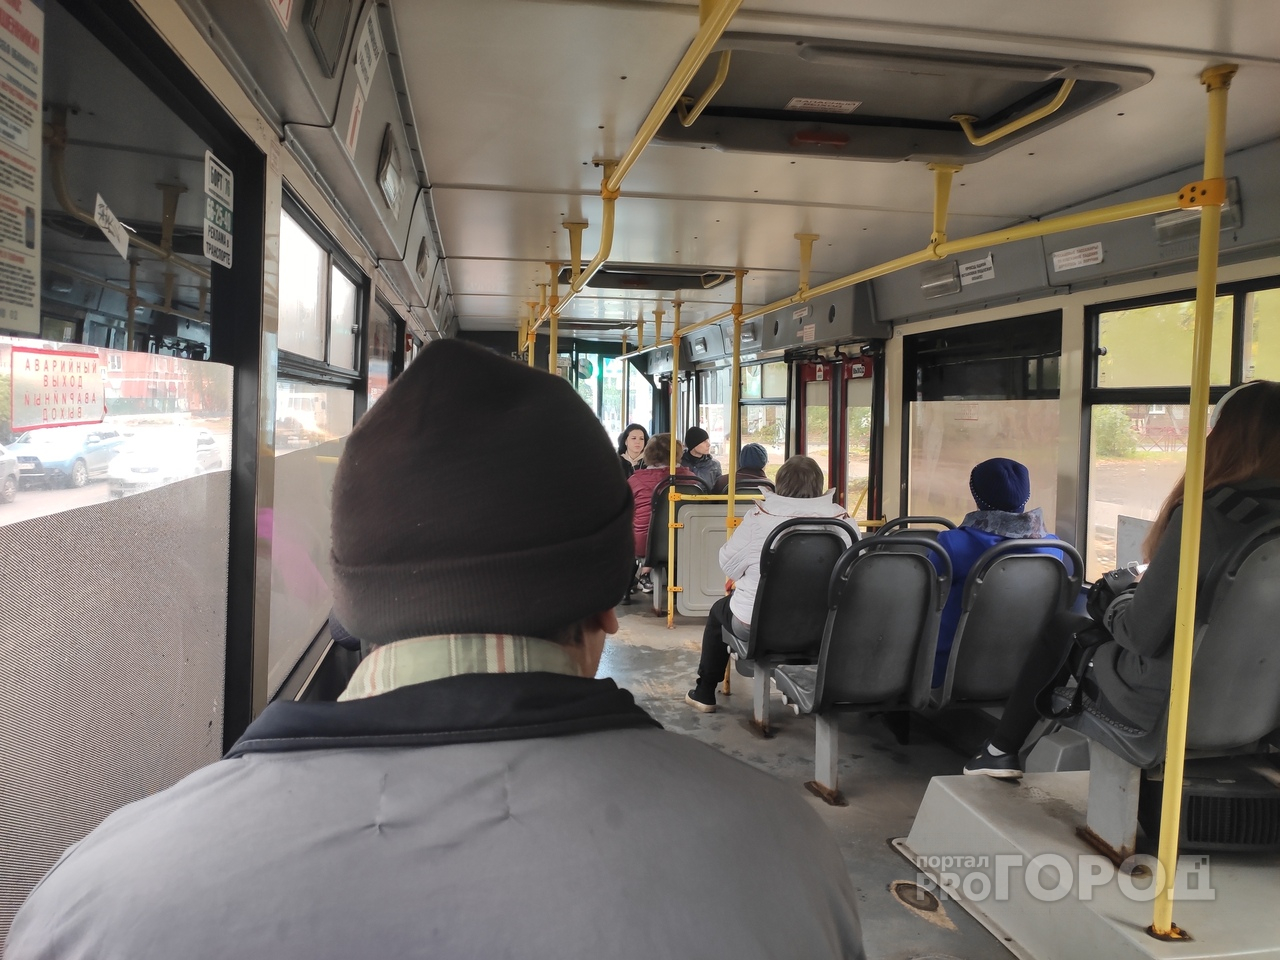 "Вляпалась в автобусе": ярославцы бунтуют против транспорта без кондукторов